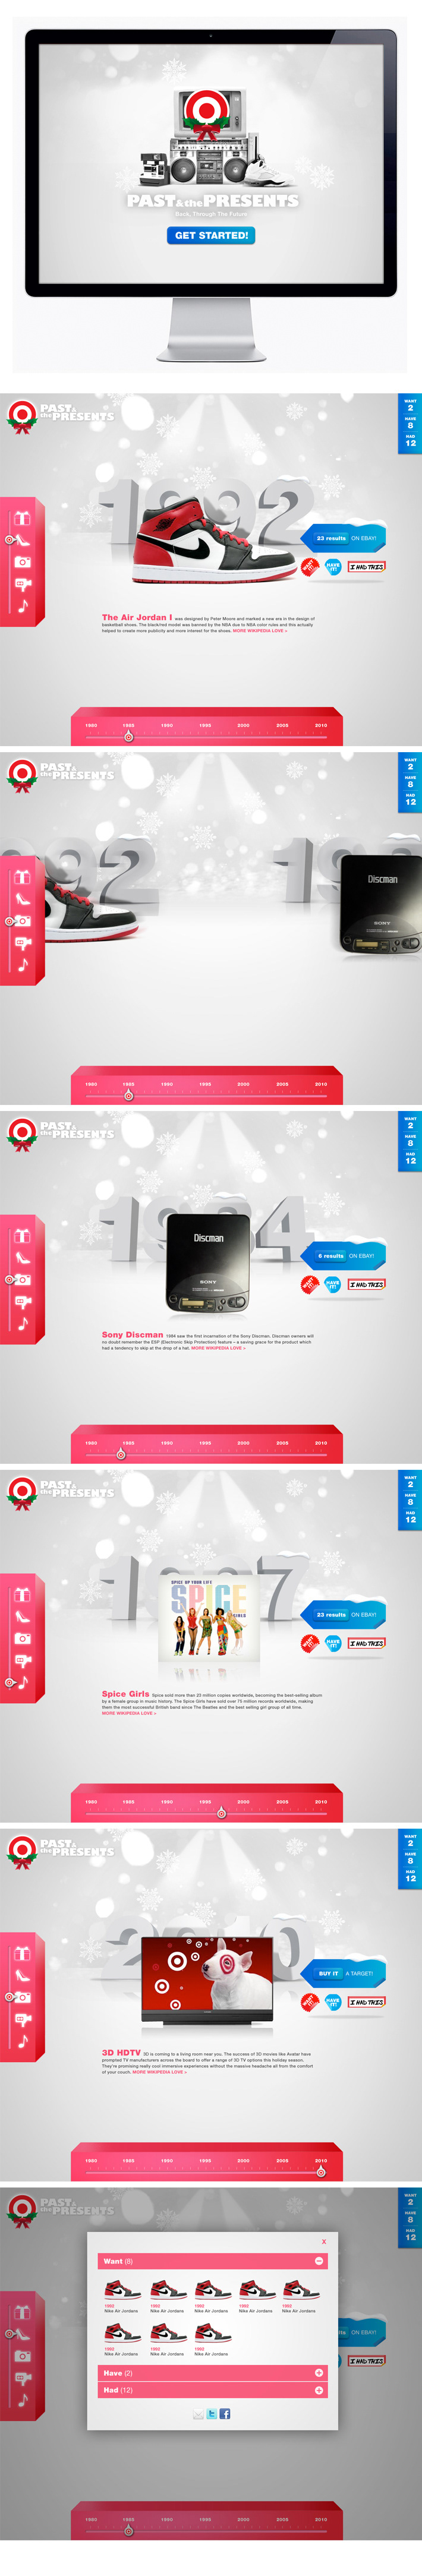 Mtv target Flash design UI Web Promotion promo gery xmas Black Friday seasonal